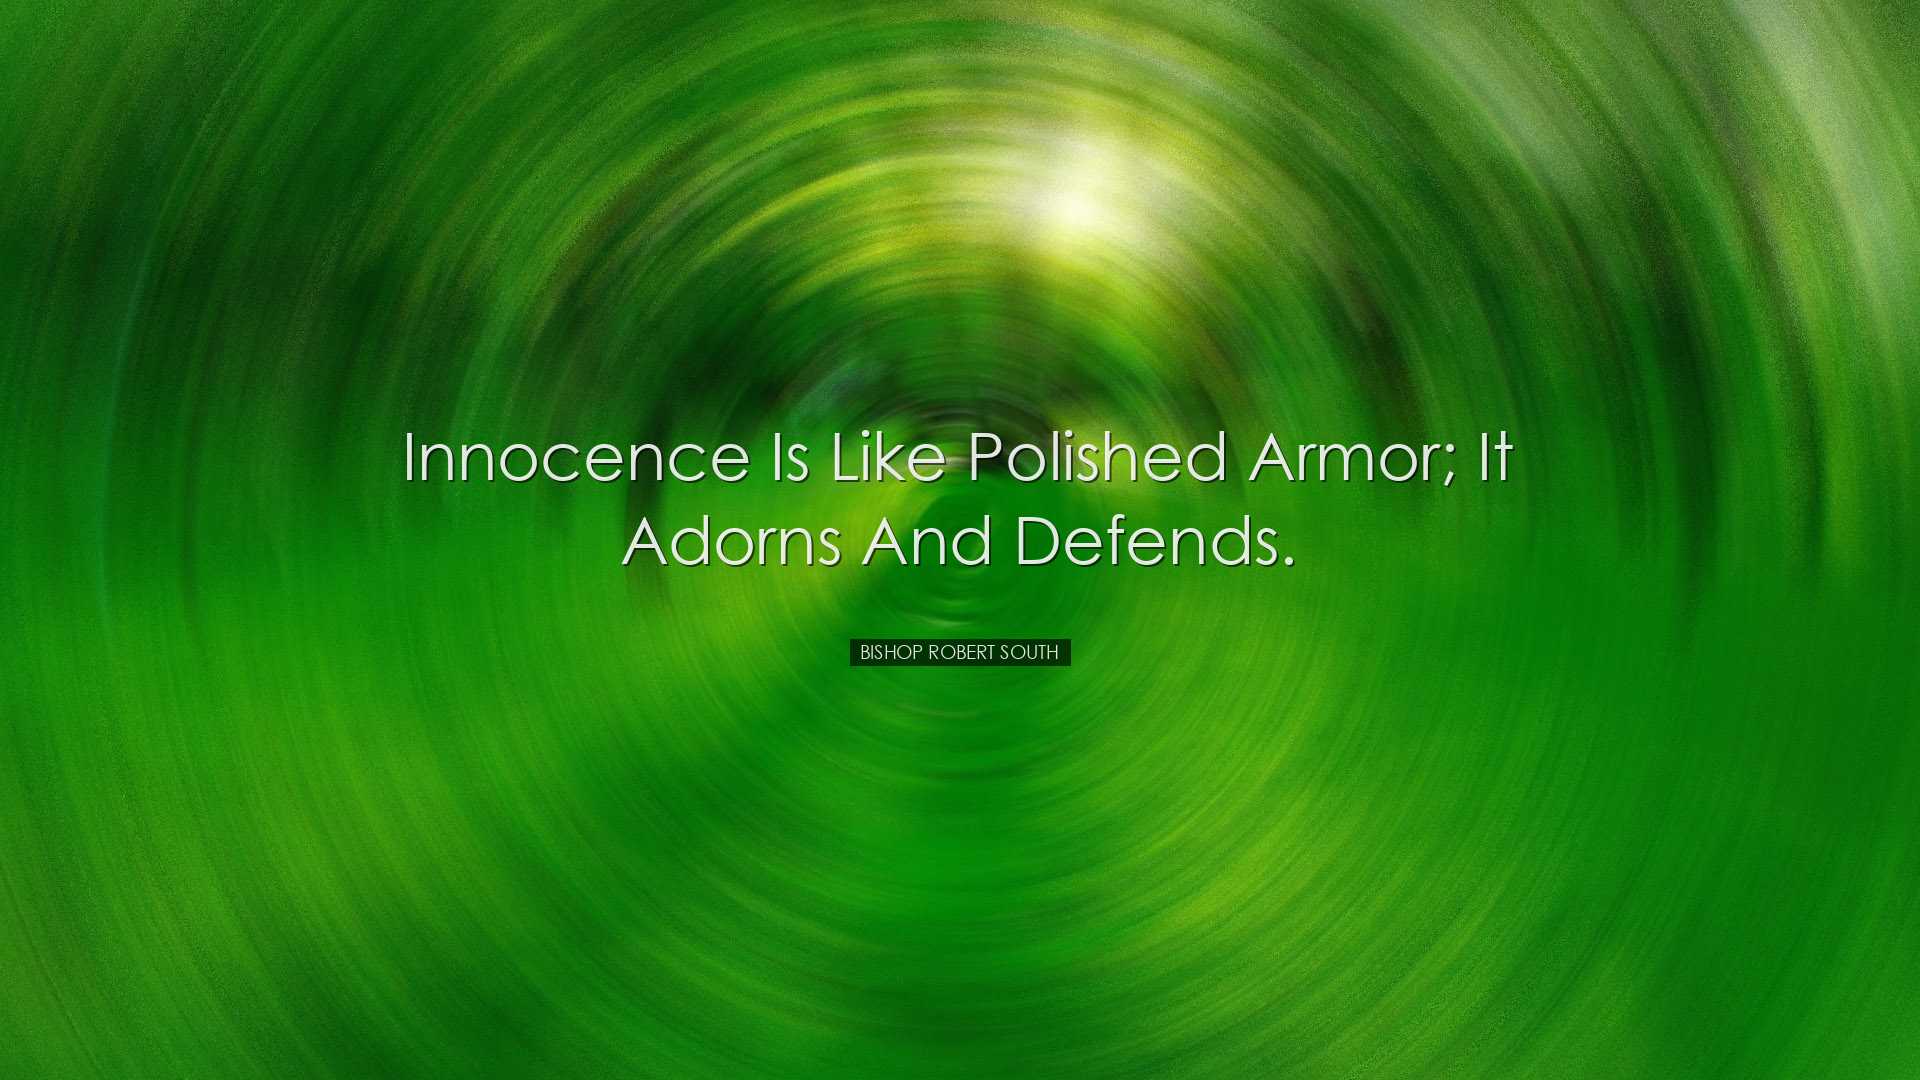 Innocence is like polished armor; it adorns and defends. - Bishop